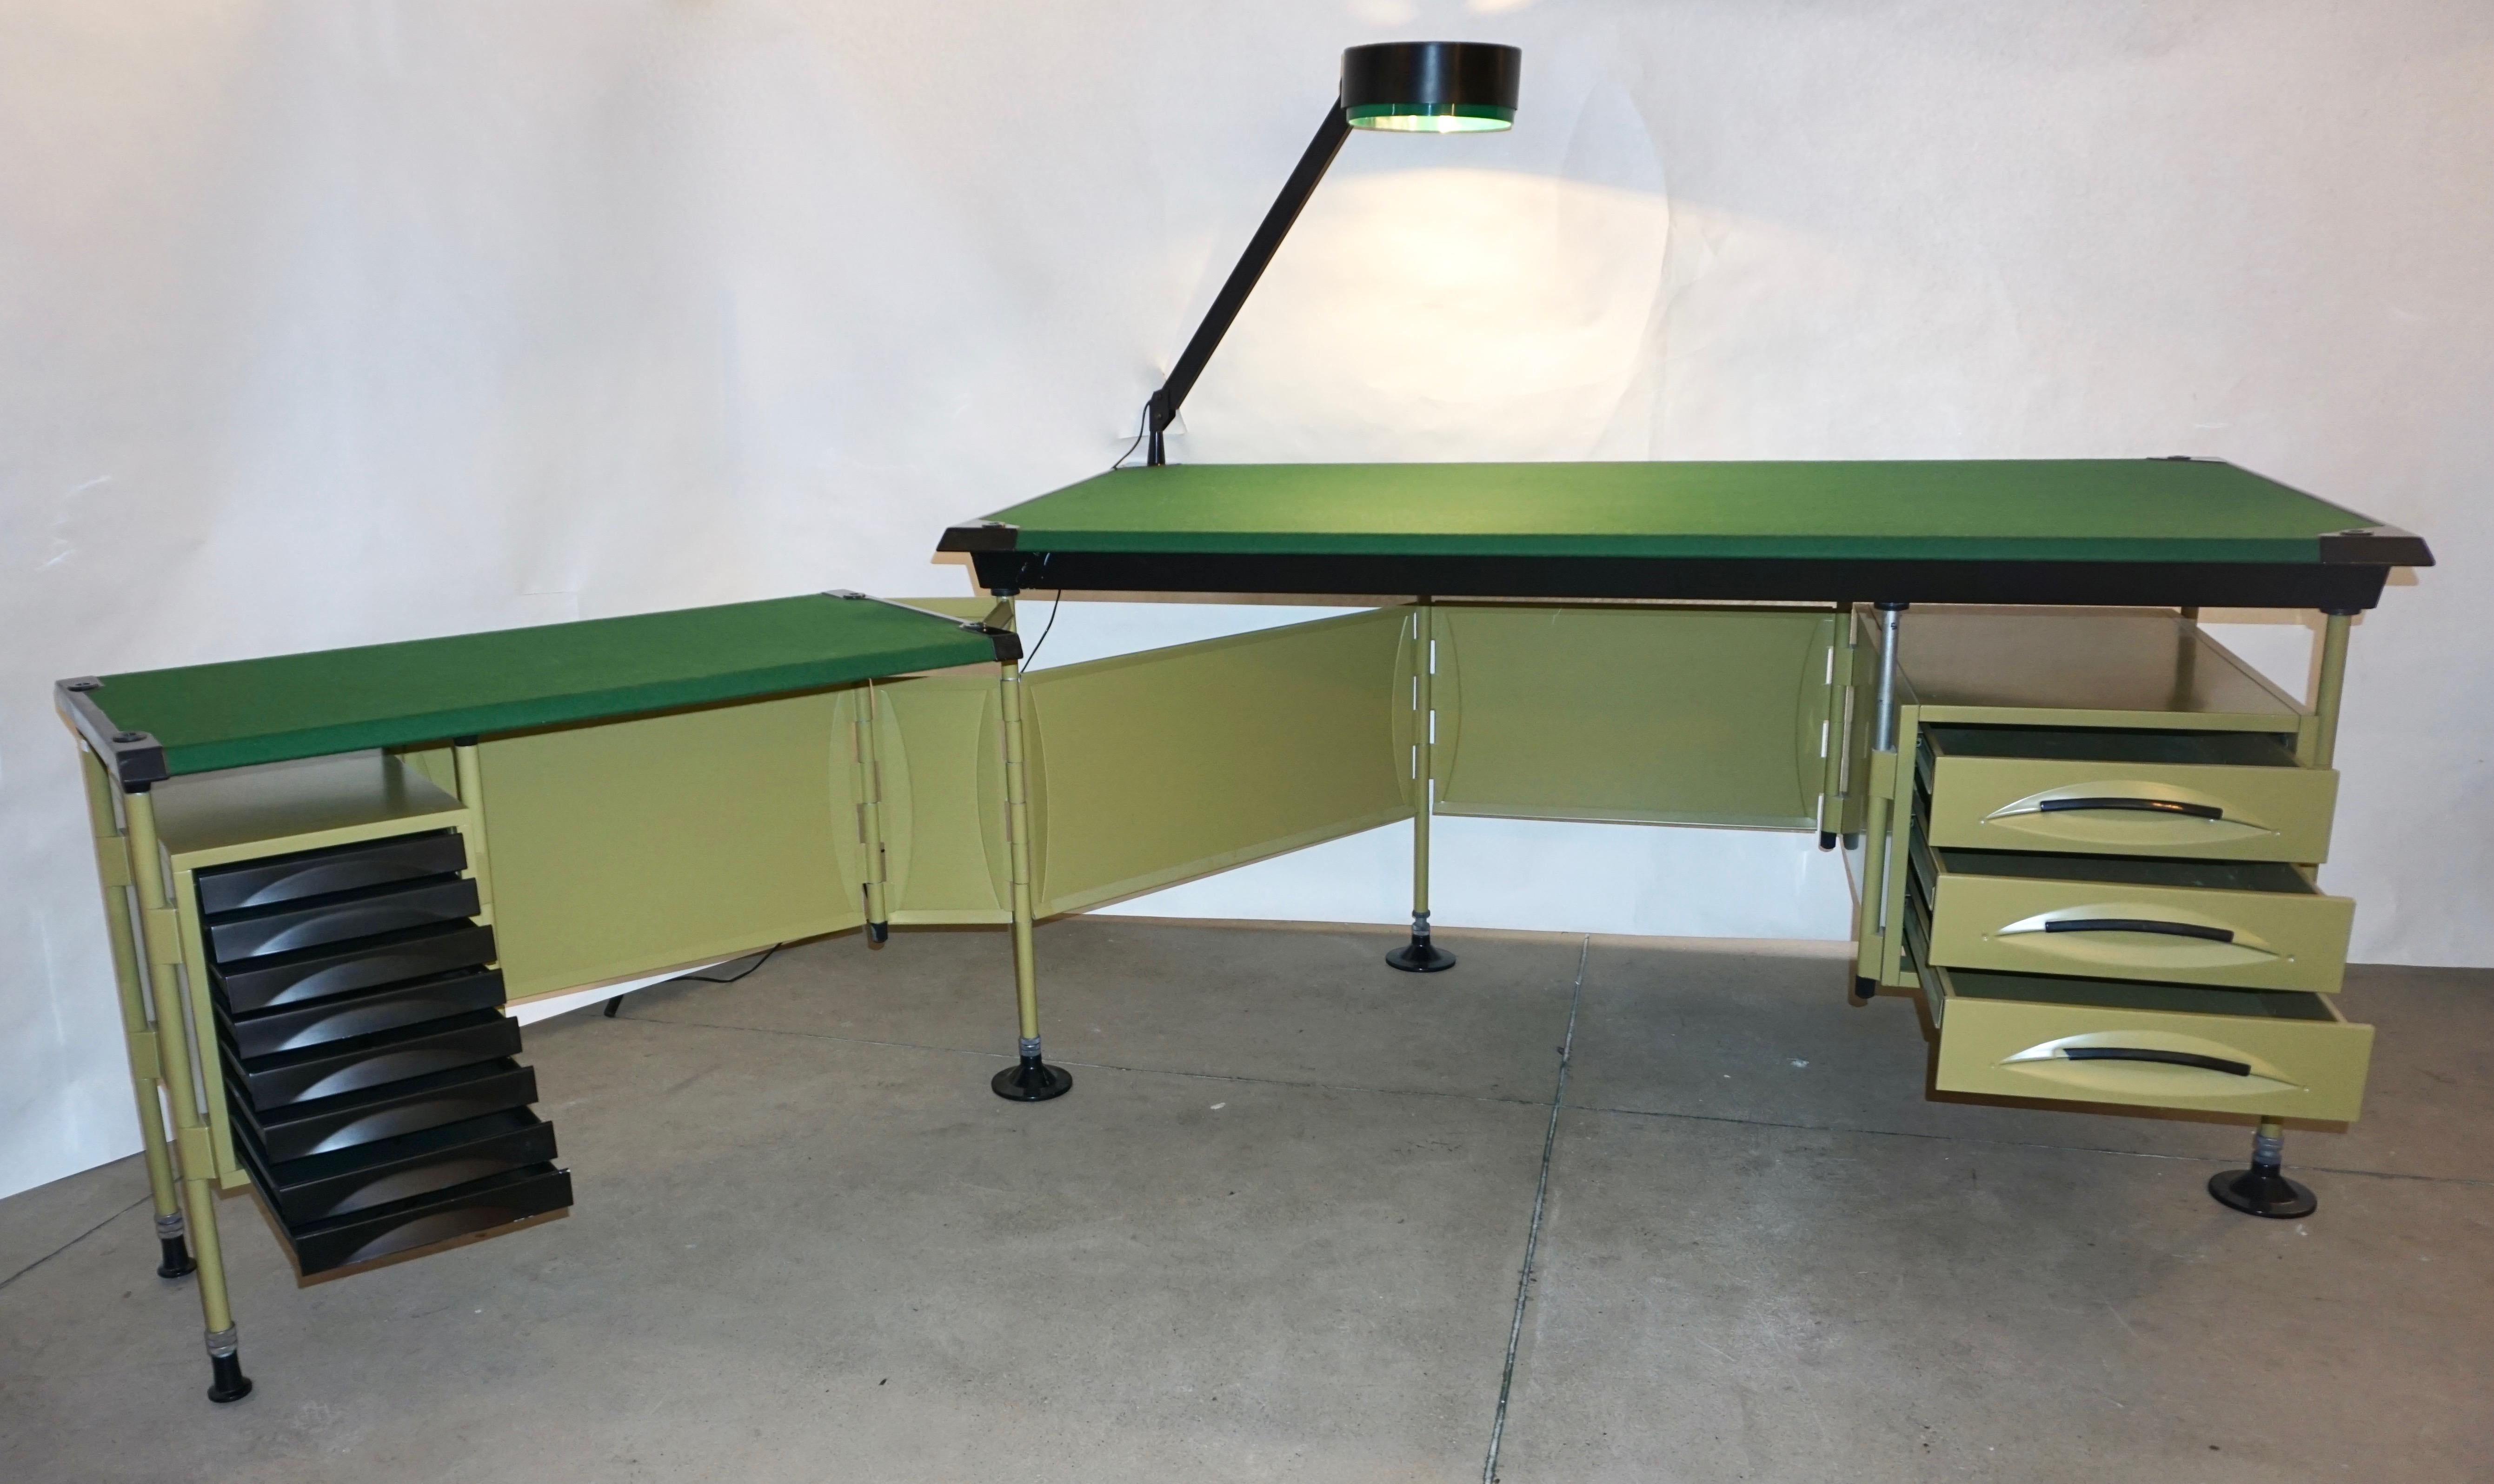 Italian Mid-Century Modern complete desk, by Olivetti, designed by Studio BBPR: Ernesto Nathan Rogers (1901-1969) Enrico Peressutti (1908-1976) Barbiano di Belgiojoso (1909-2004) Gian Luigi Banfi (1910-1945) enameled metal desk 